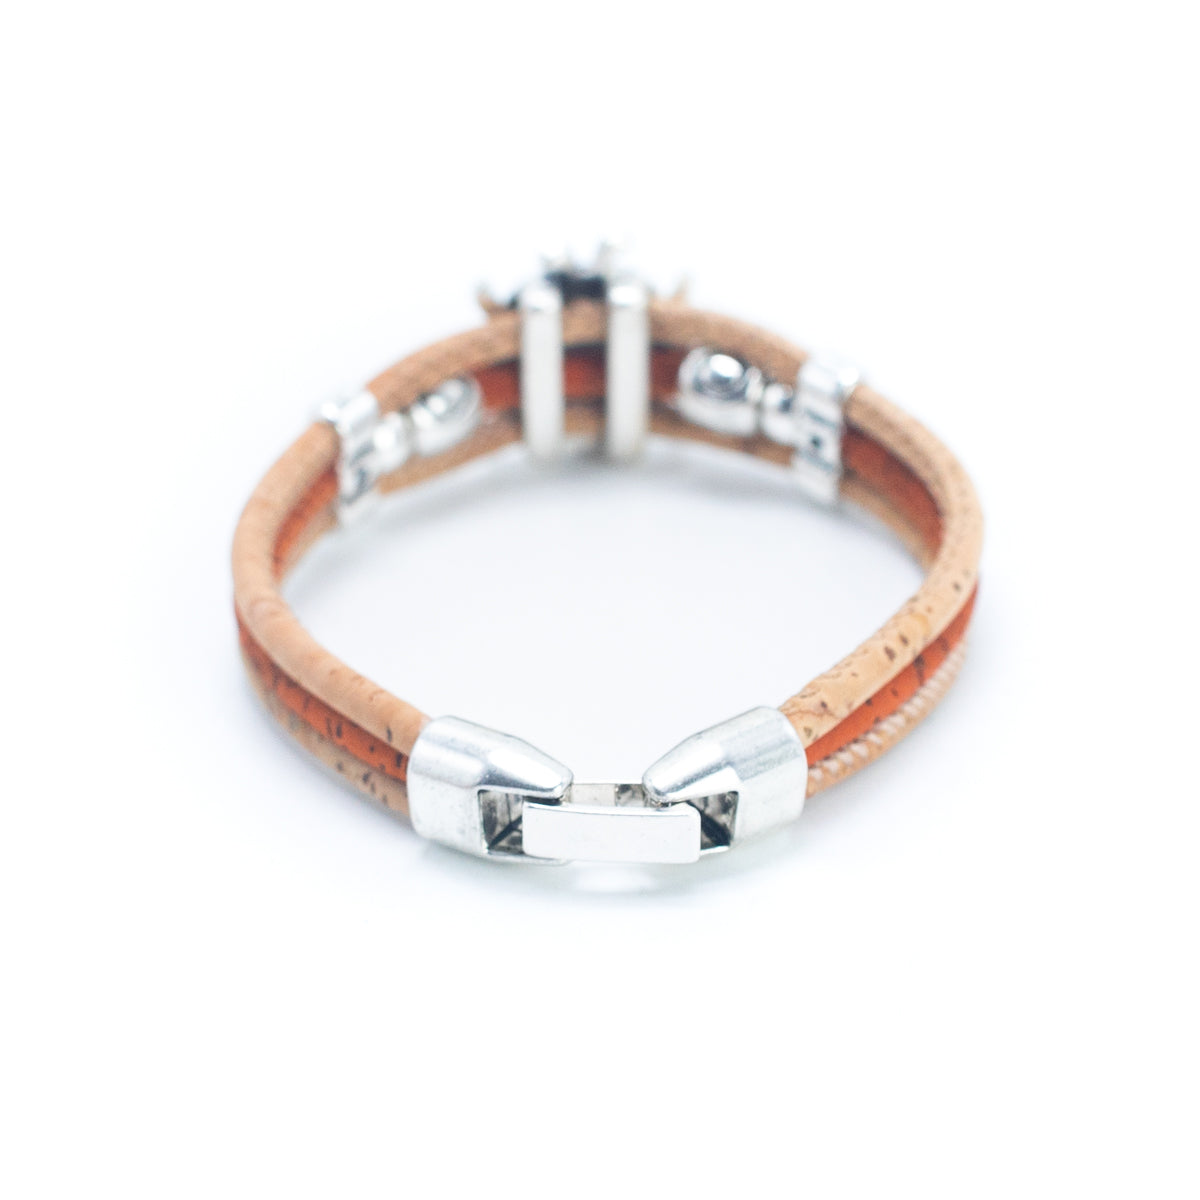 Natural Cork w/ Beetle Accessories Handmade Bracelet BR-300-MIX-5